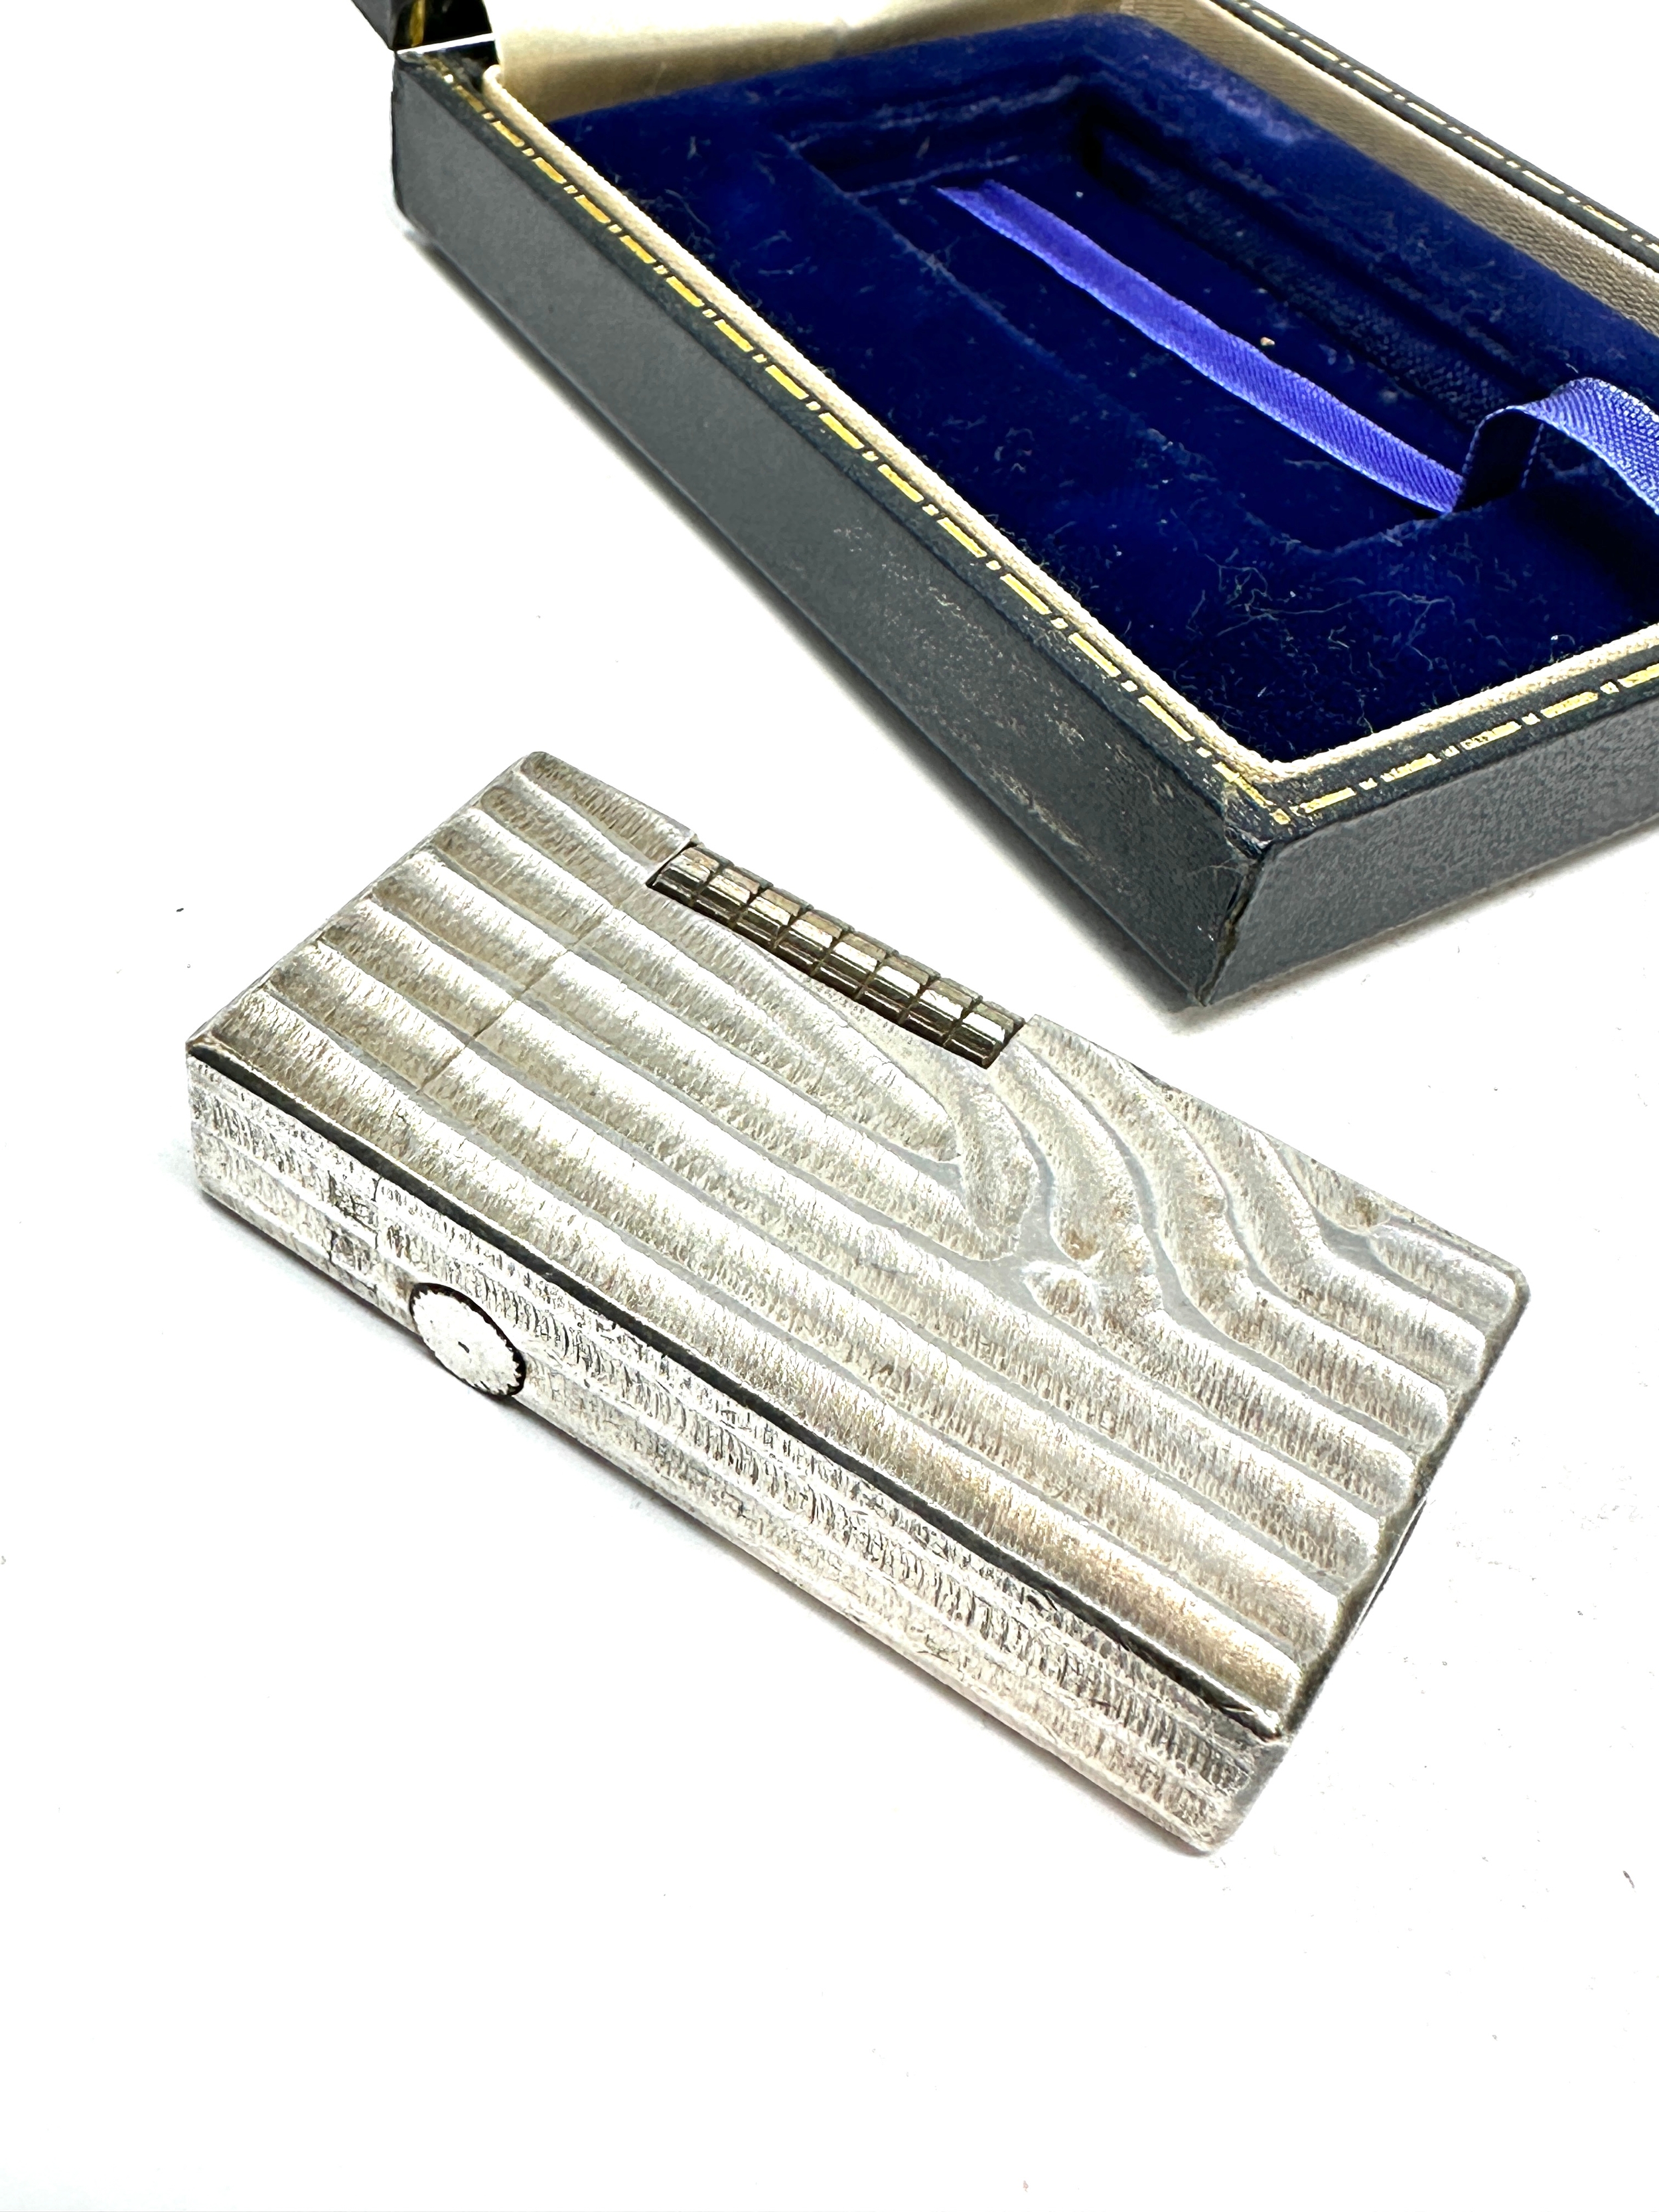 Vintage boxed Dunhill cigarette lighter - Image 3 of 5